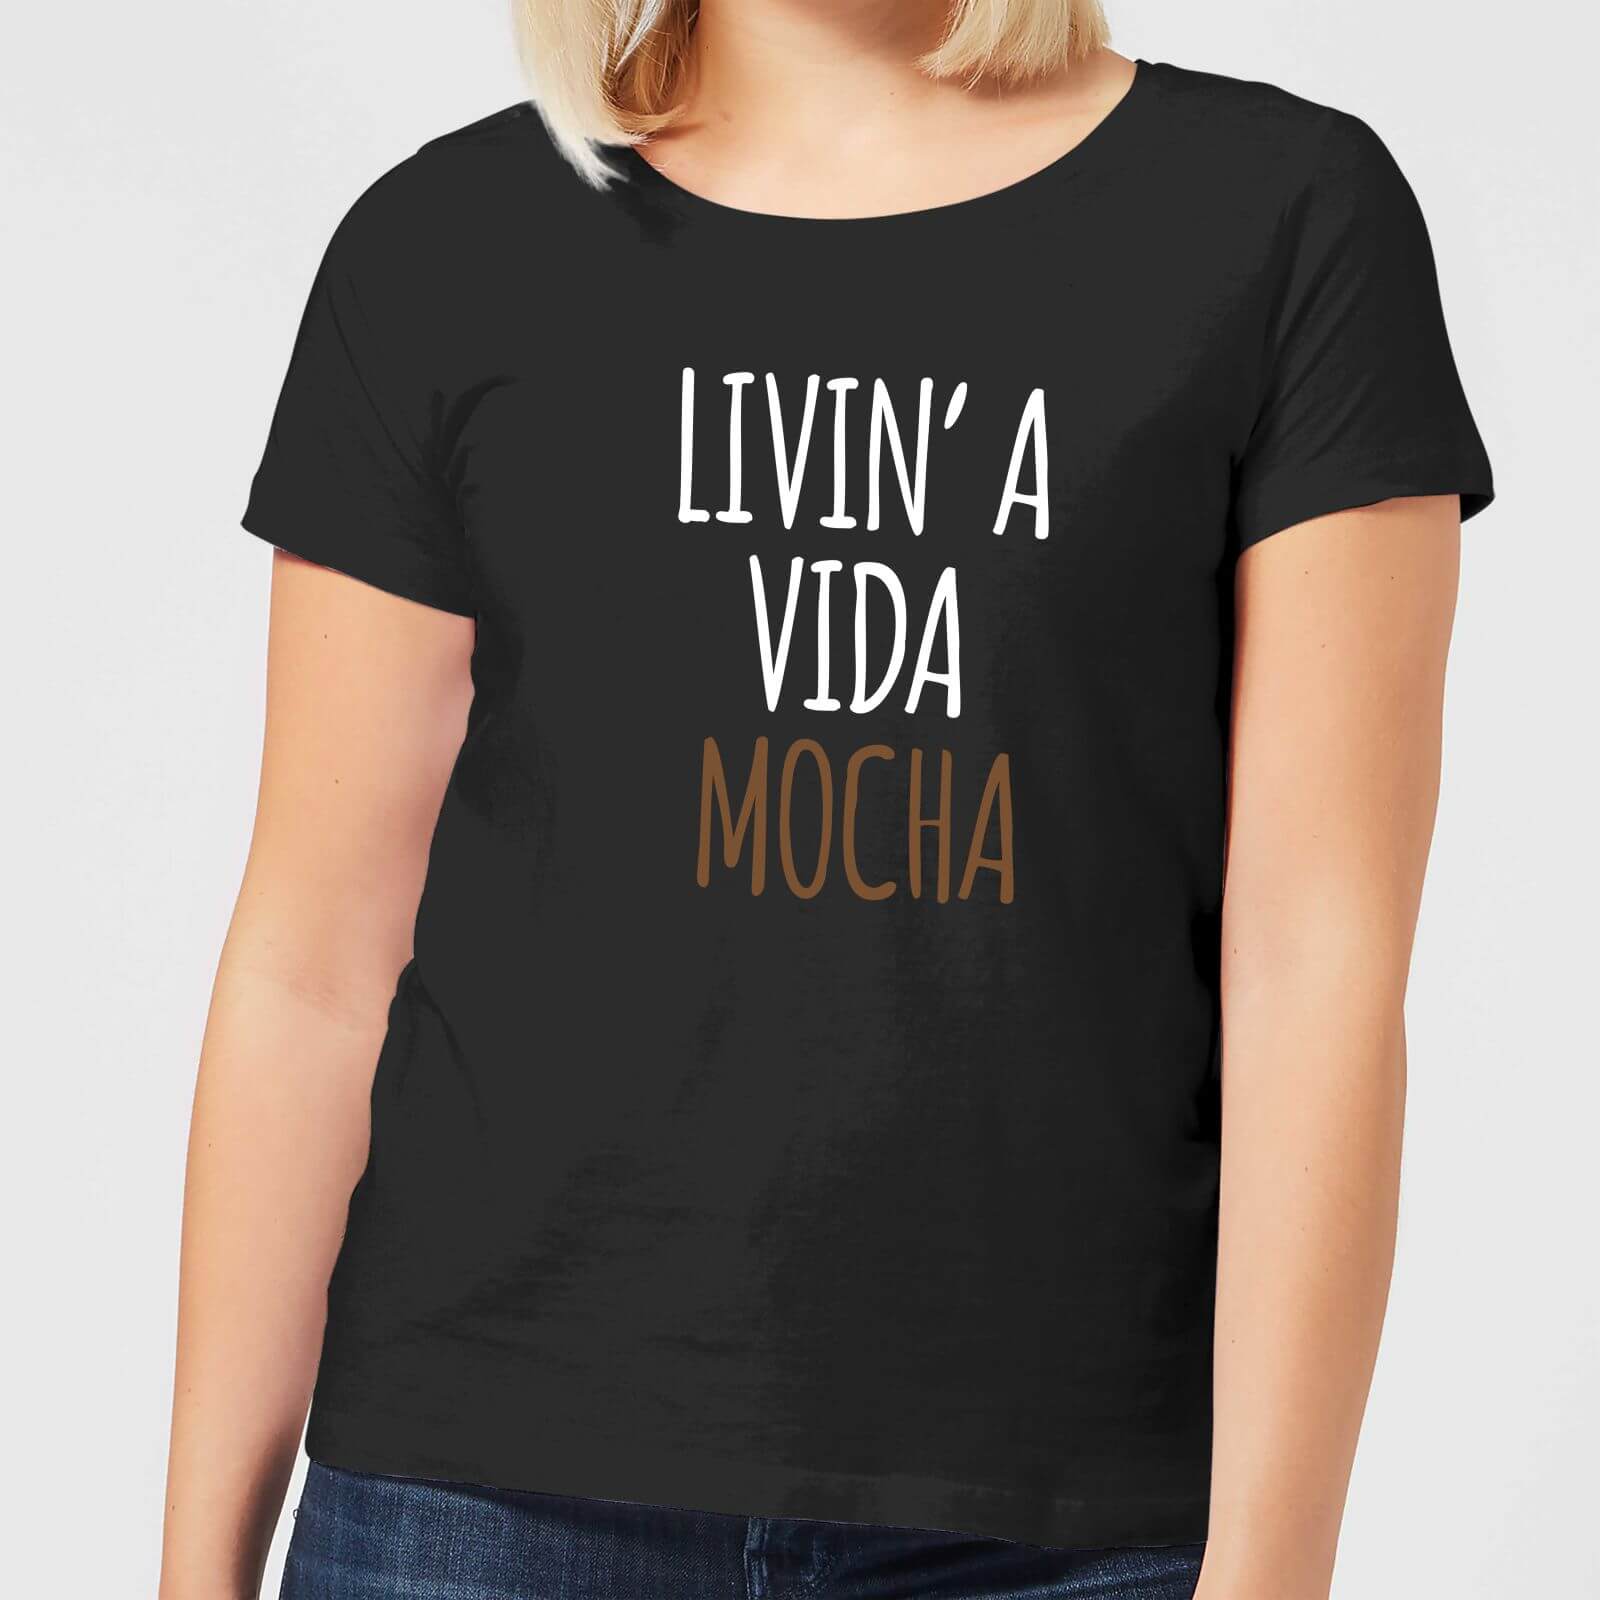 Livin' a Vida Mocha Women's T-Shirt - Black - 3XL - Black